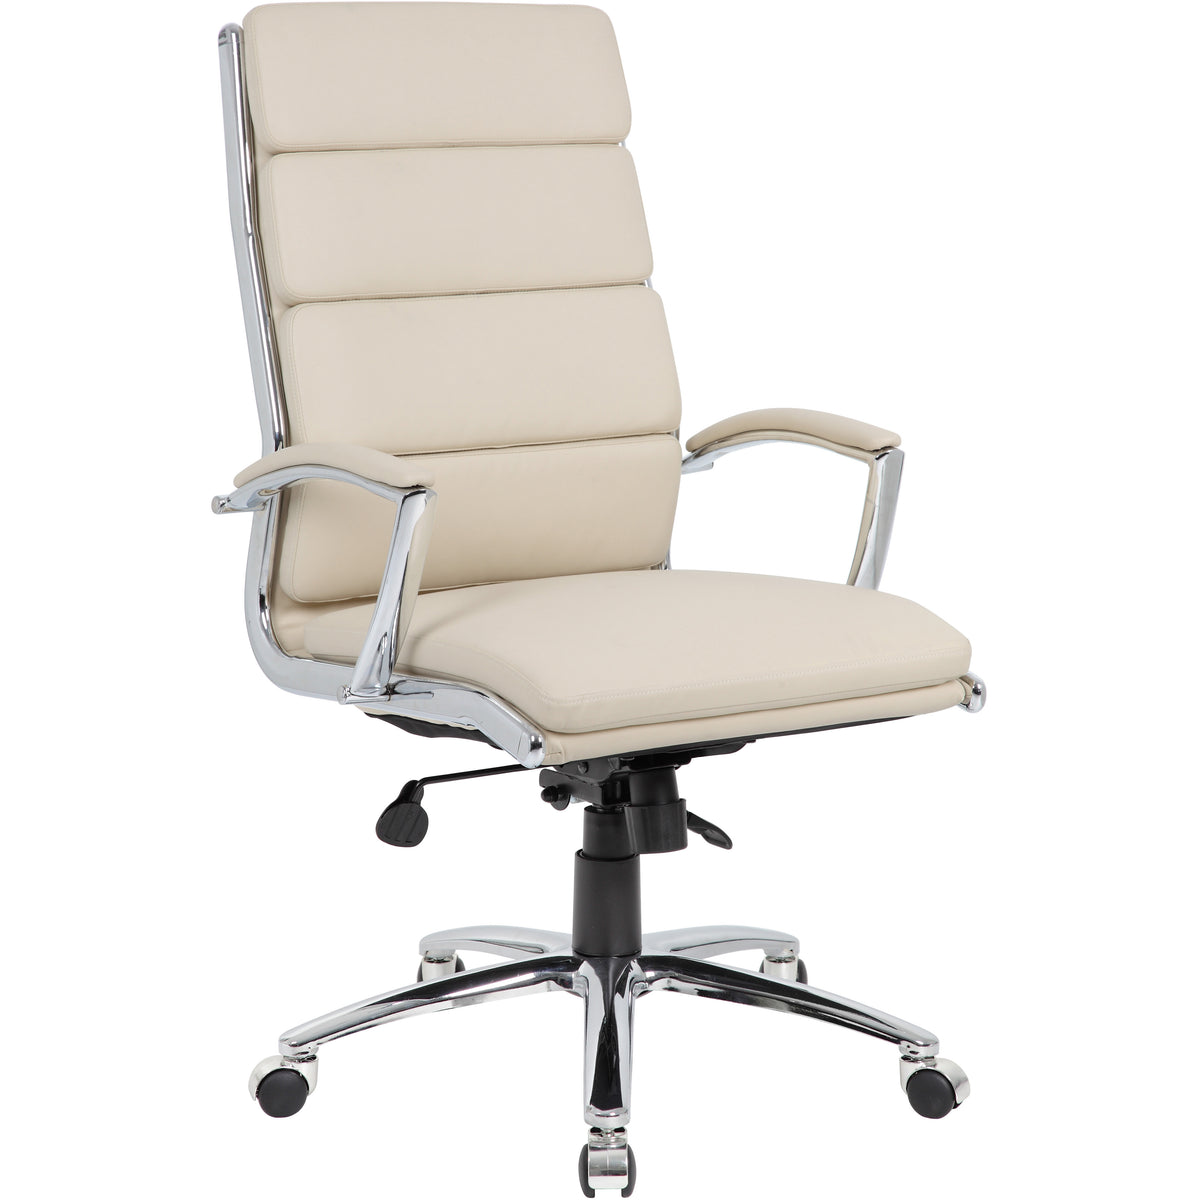 Executive CaressoftPlus Chair with Metal Chrome Finish, B9471-BG